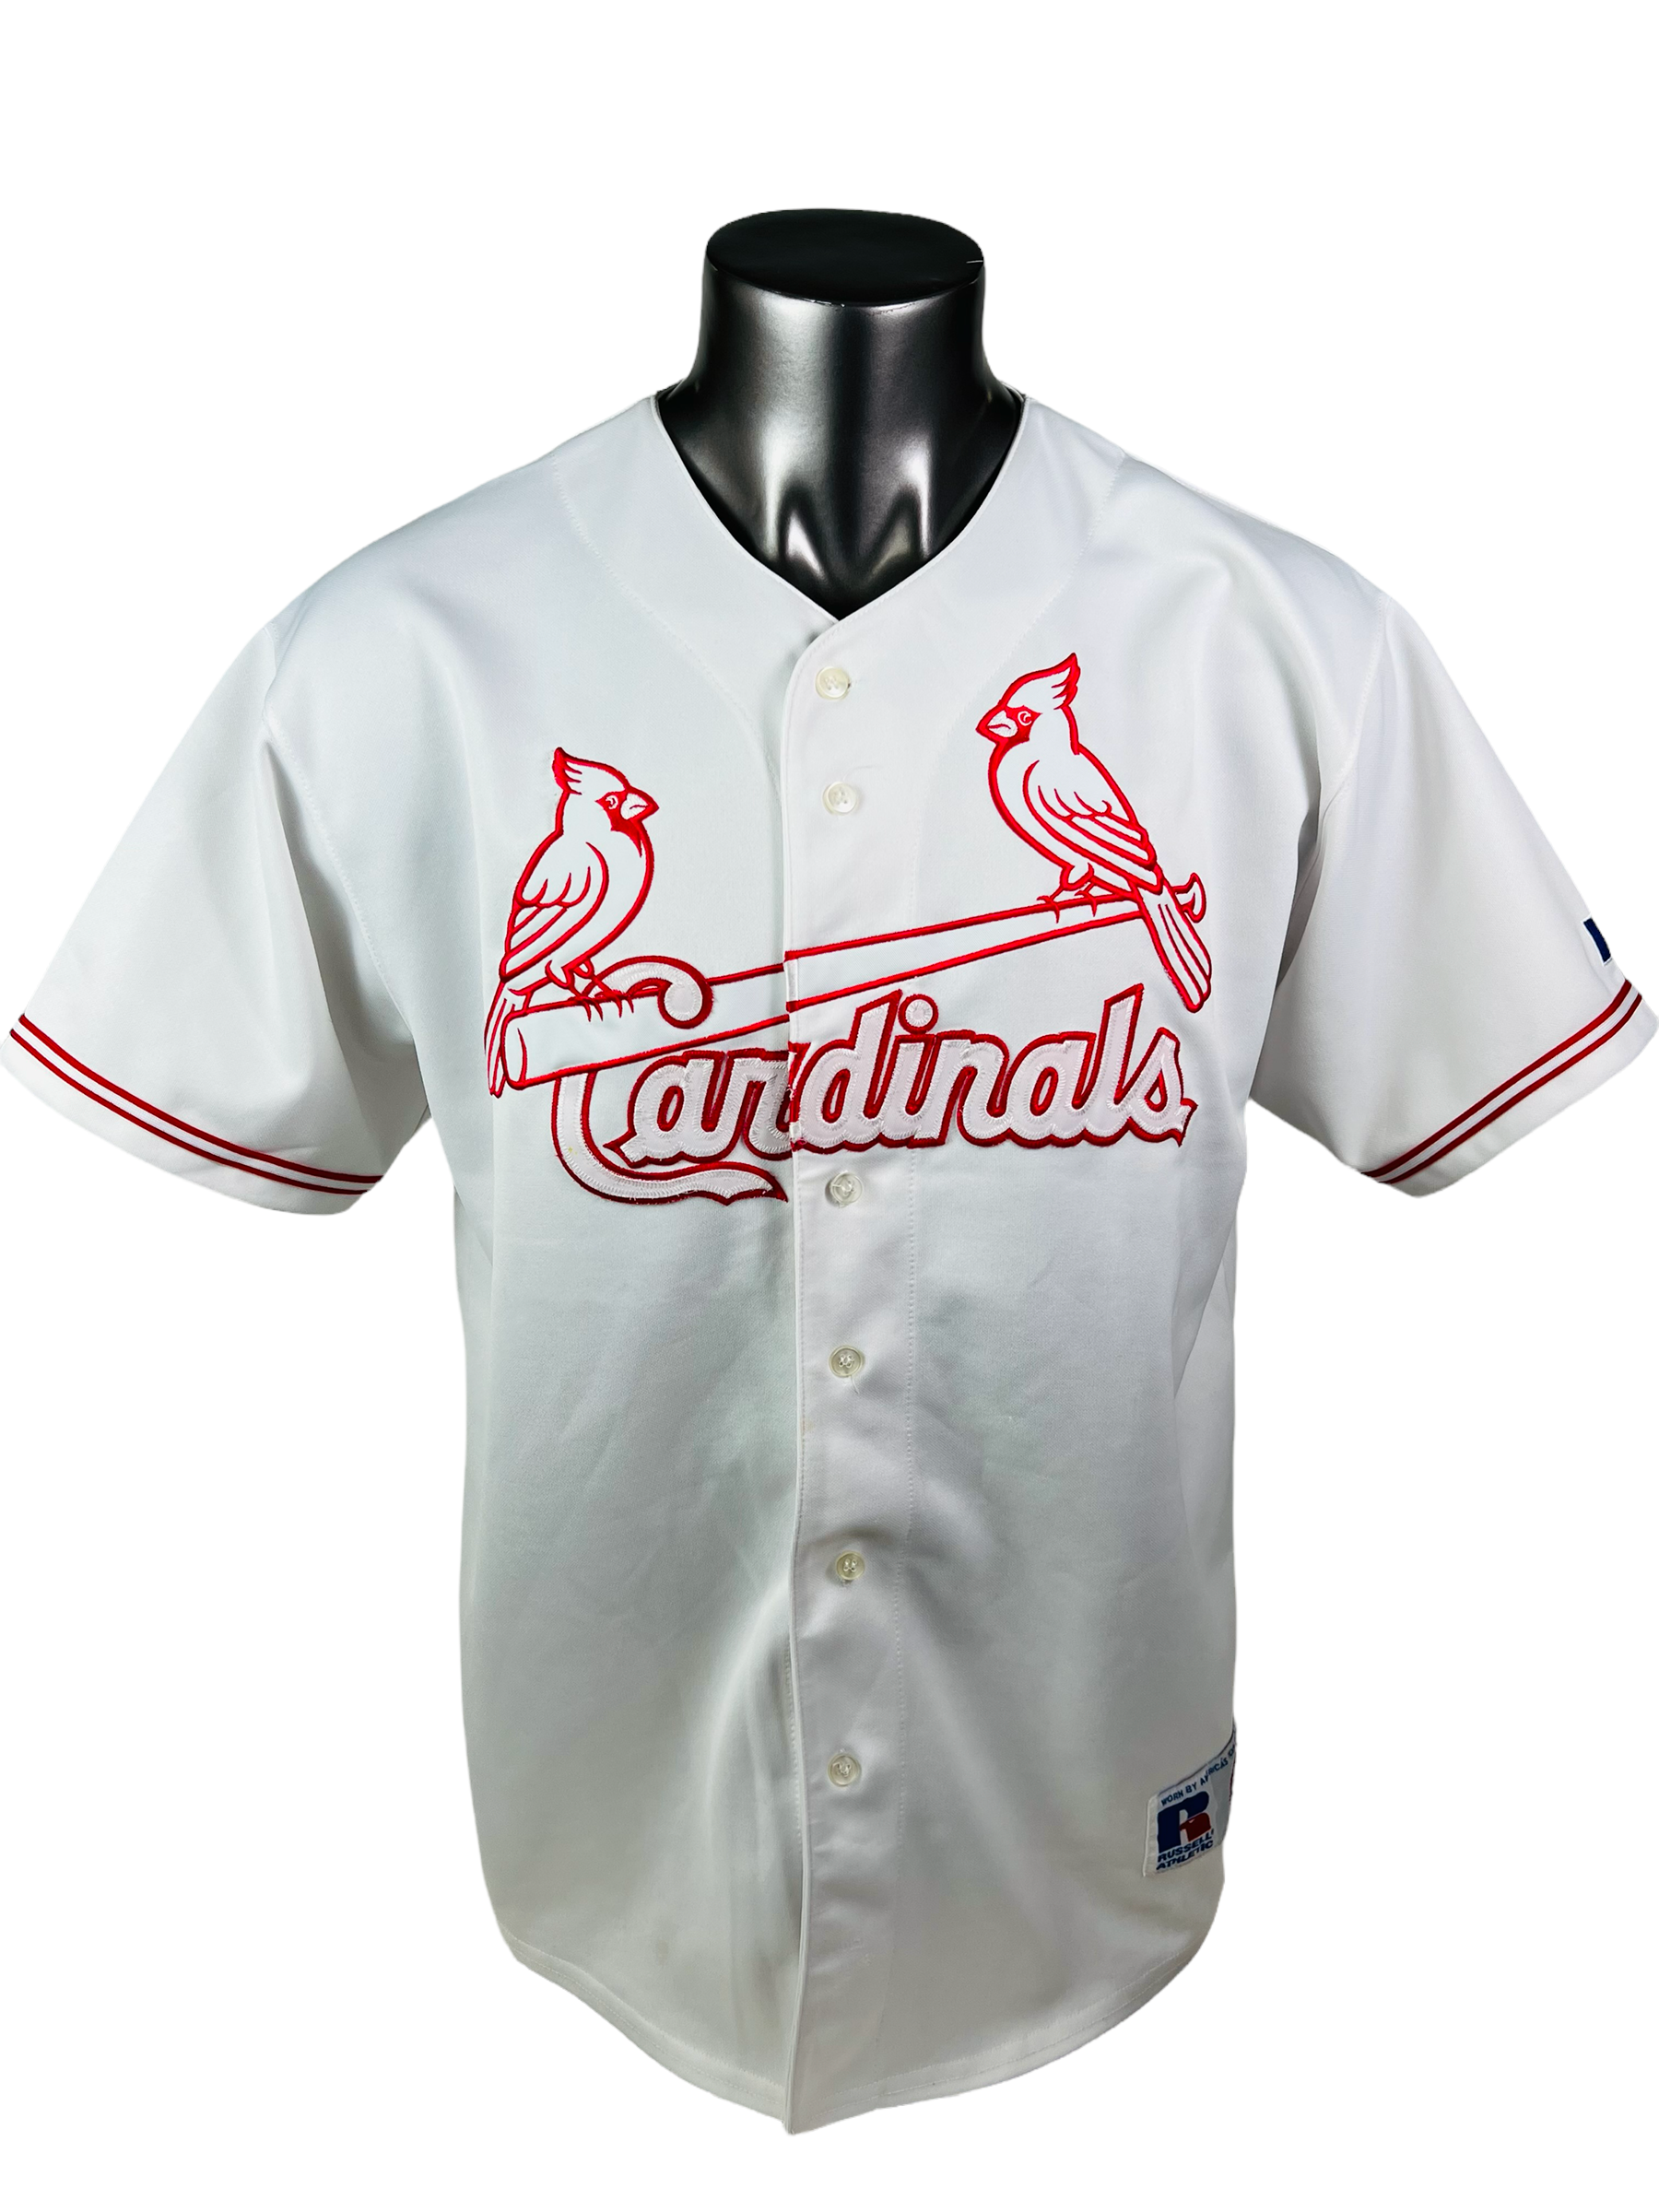 St. Louis vintage jerseys